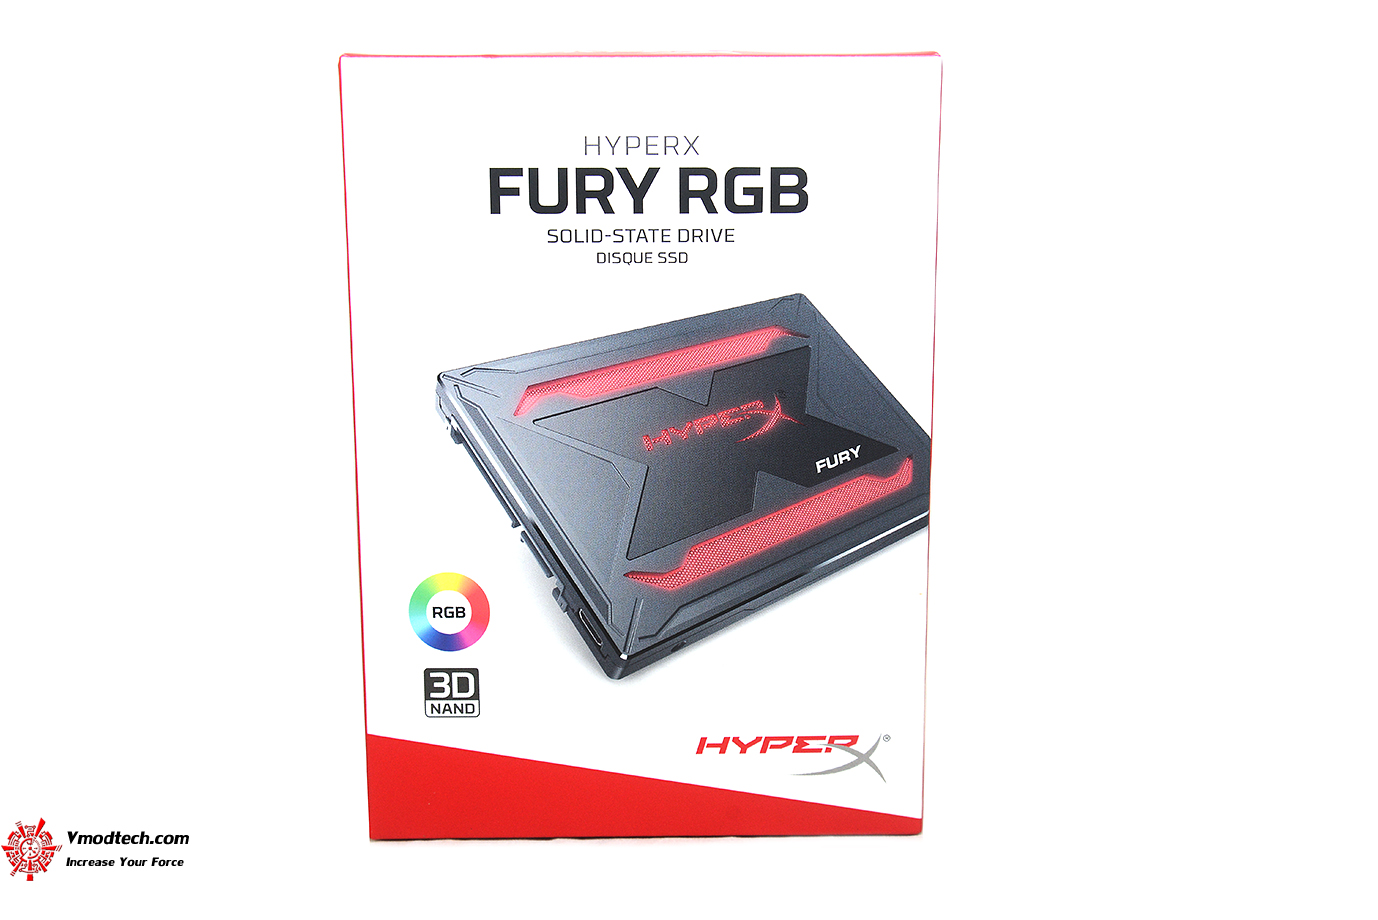 dsc 4269 HyperX FURY RGB SSD 480GB REVIEW